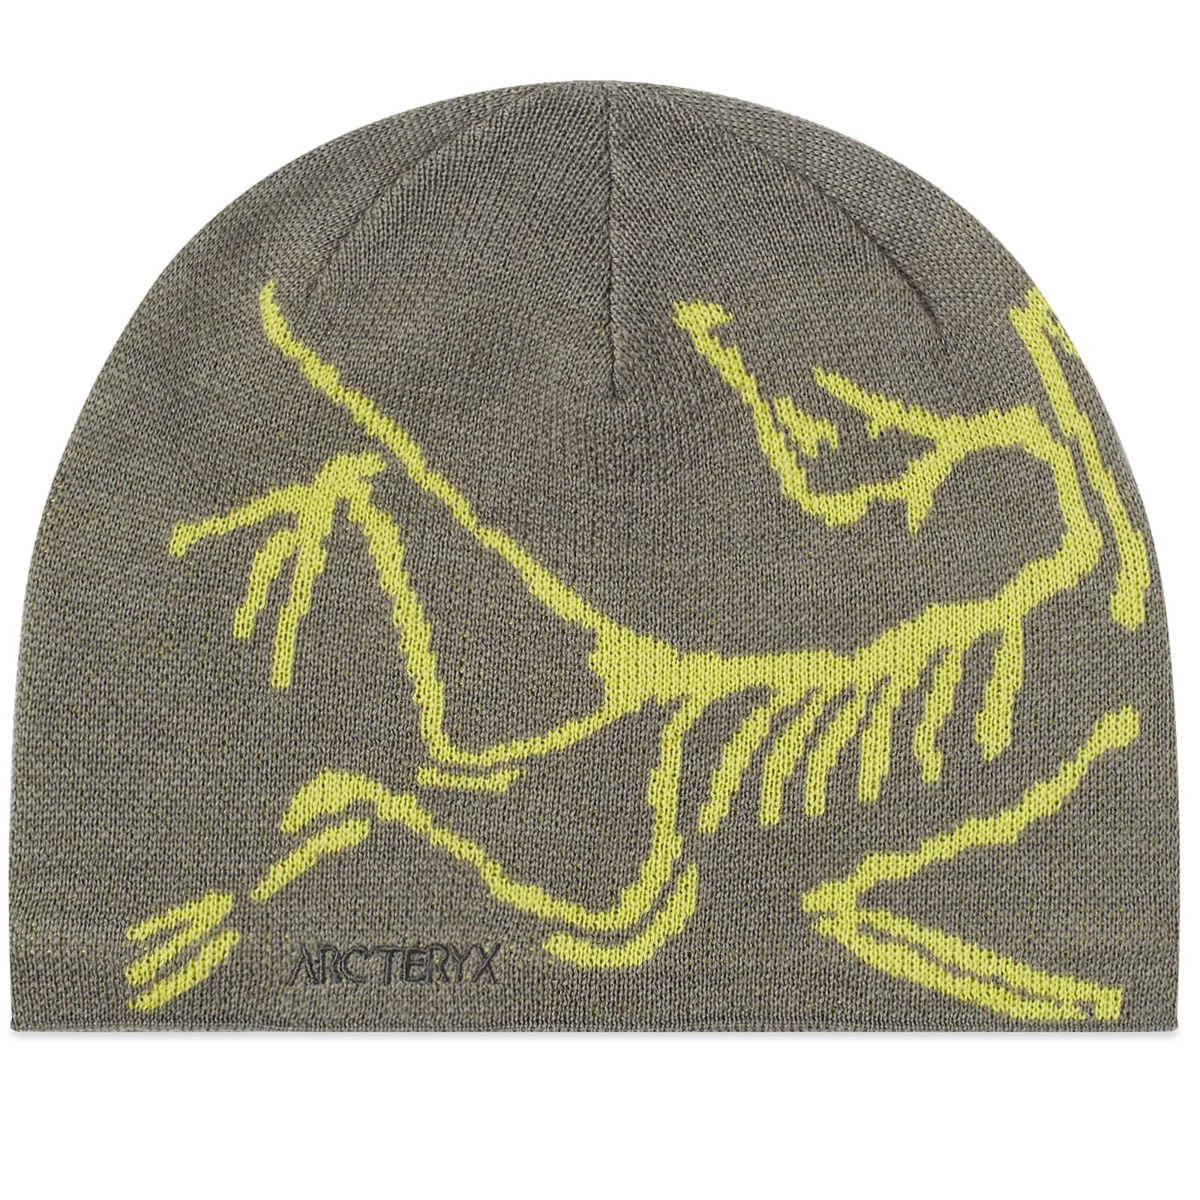 Arc'teryx Men's Arcteryx Bird Head Toque Beanie in Phoenom/Habitat